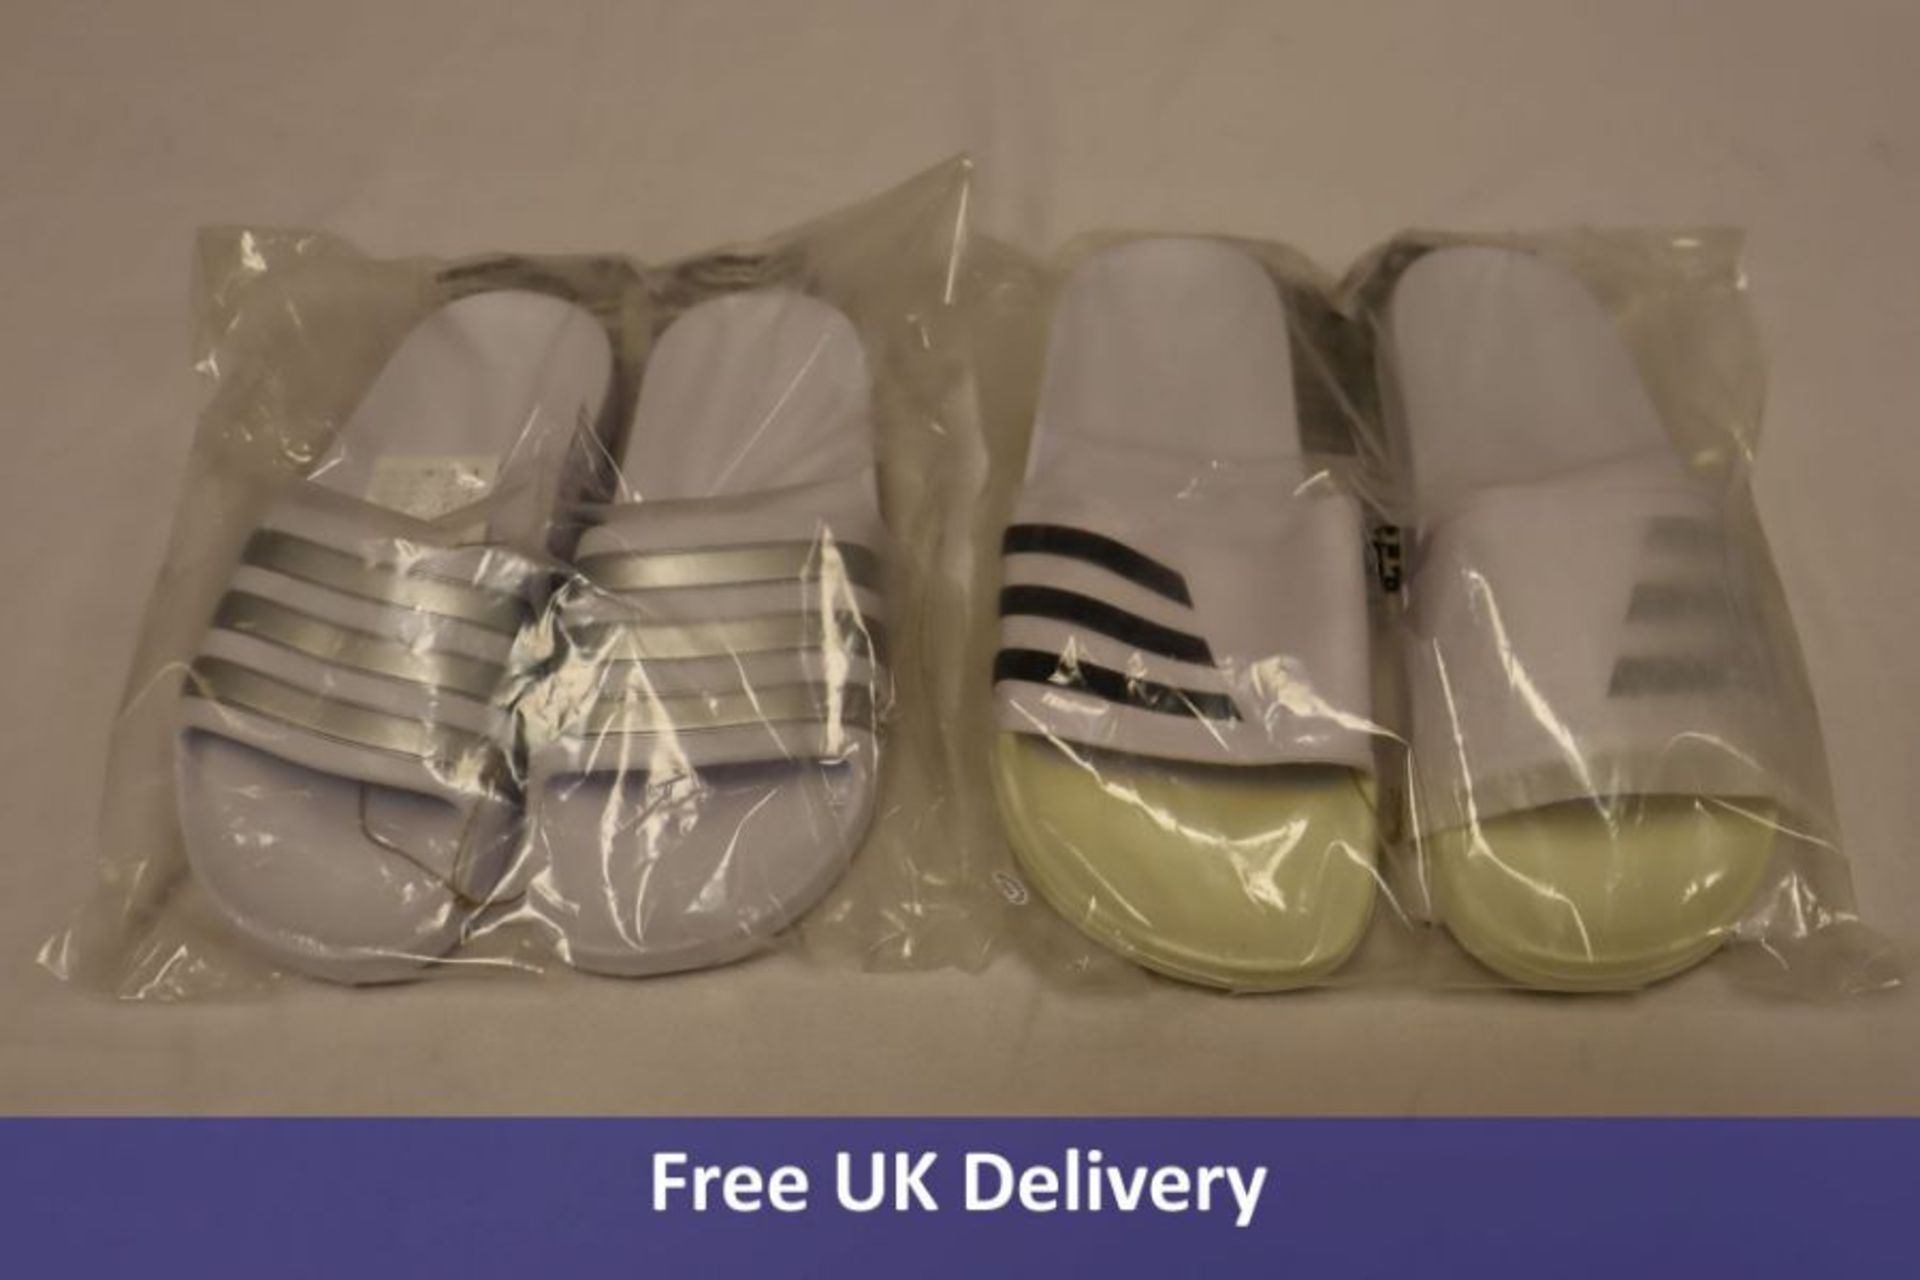 Five Pairs Adidas Sliders to include 1x UK 9, 4x UK 4, White